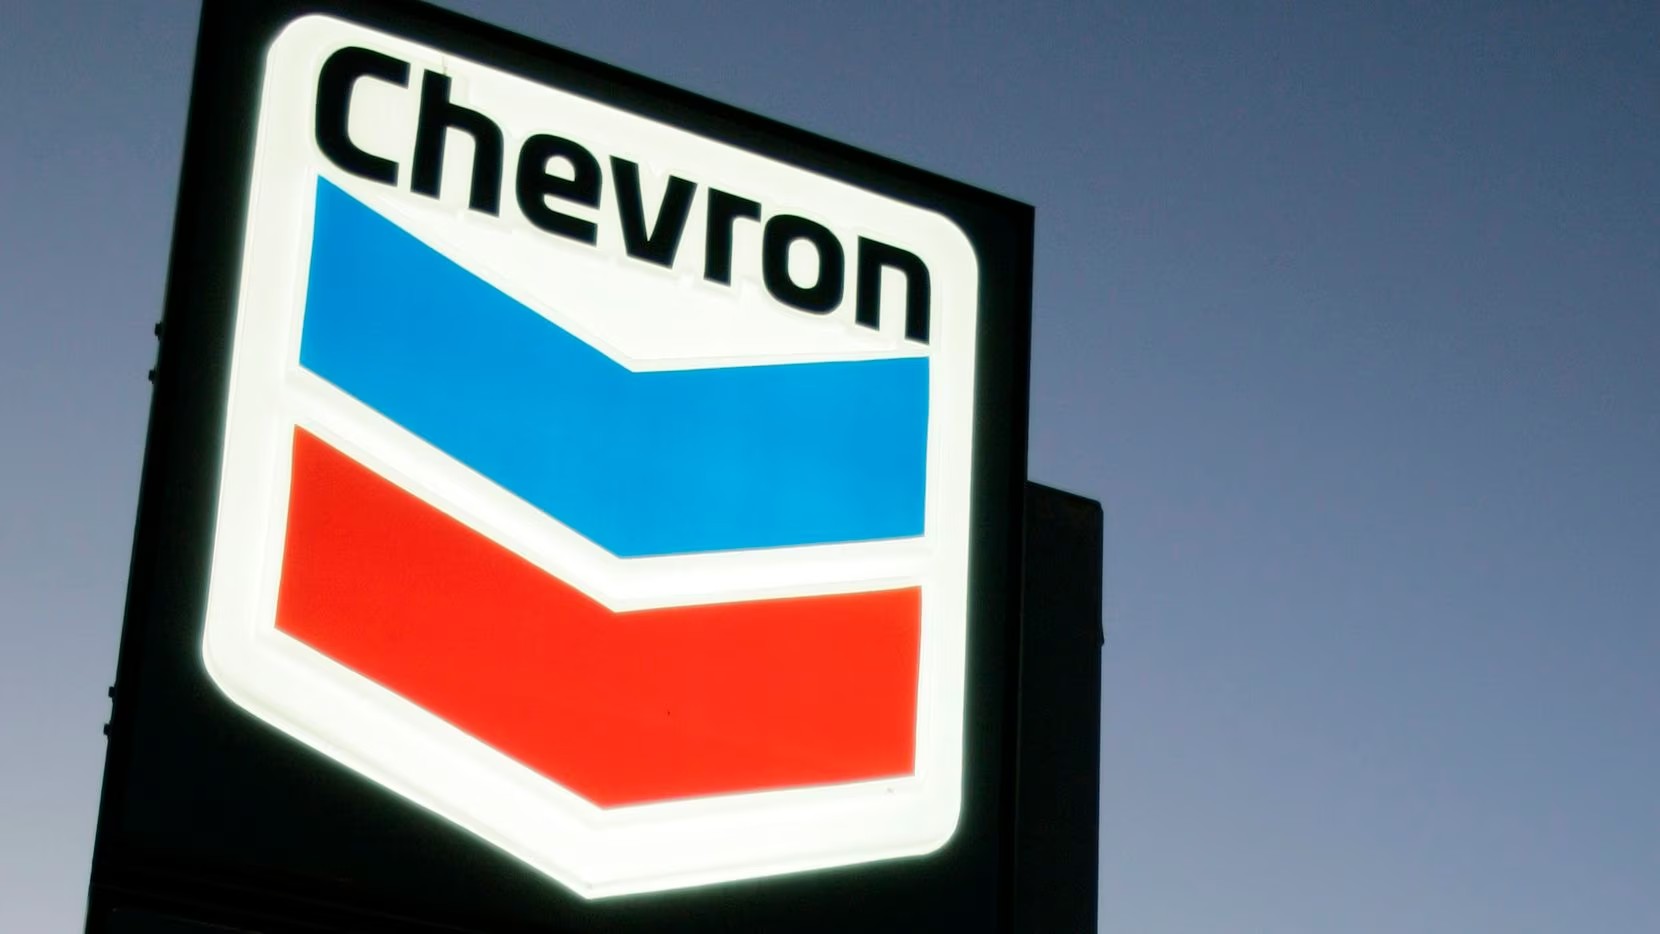 Chevron: Οι εργαζόμενοι καταψήφισαν την πρόταση της διοίκησης για τις αμοιβές